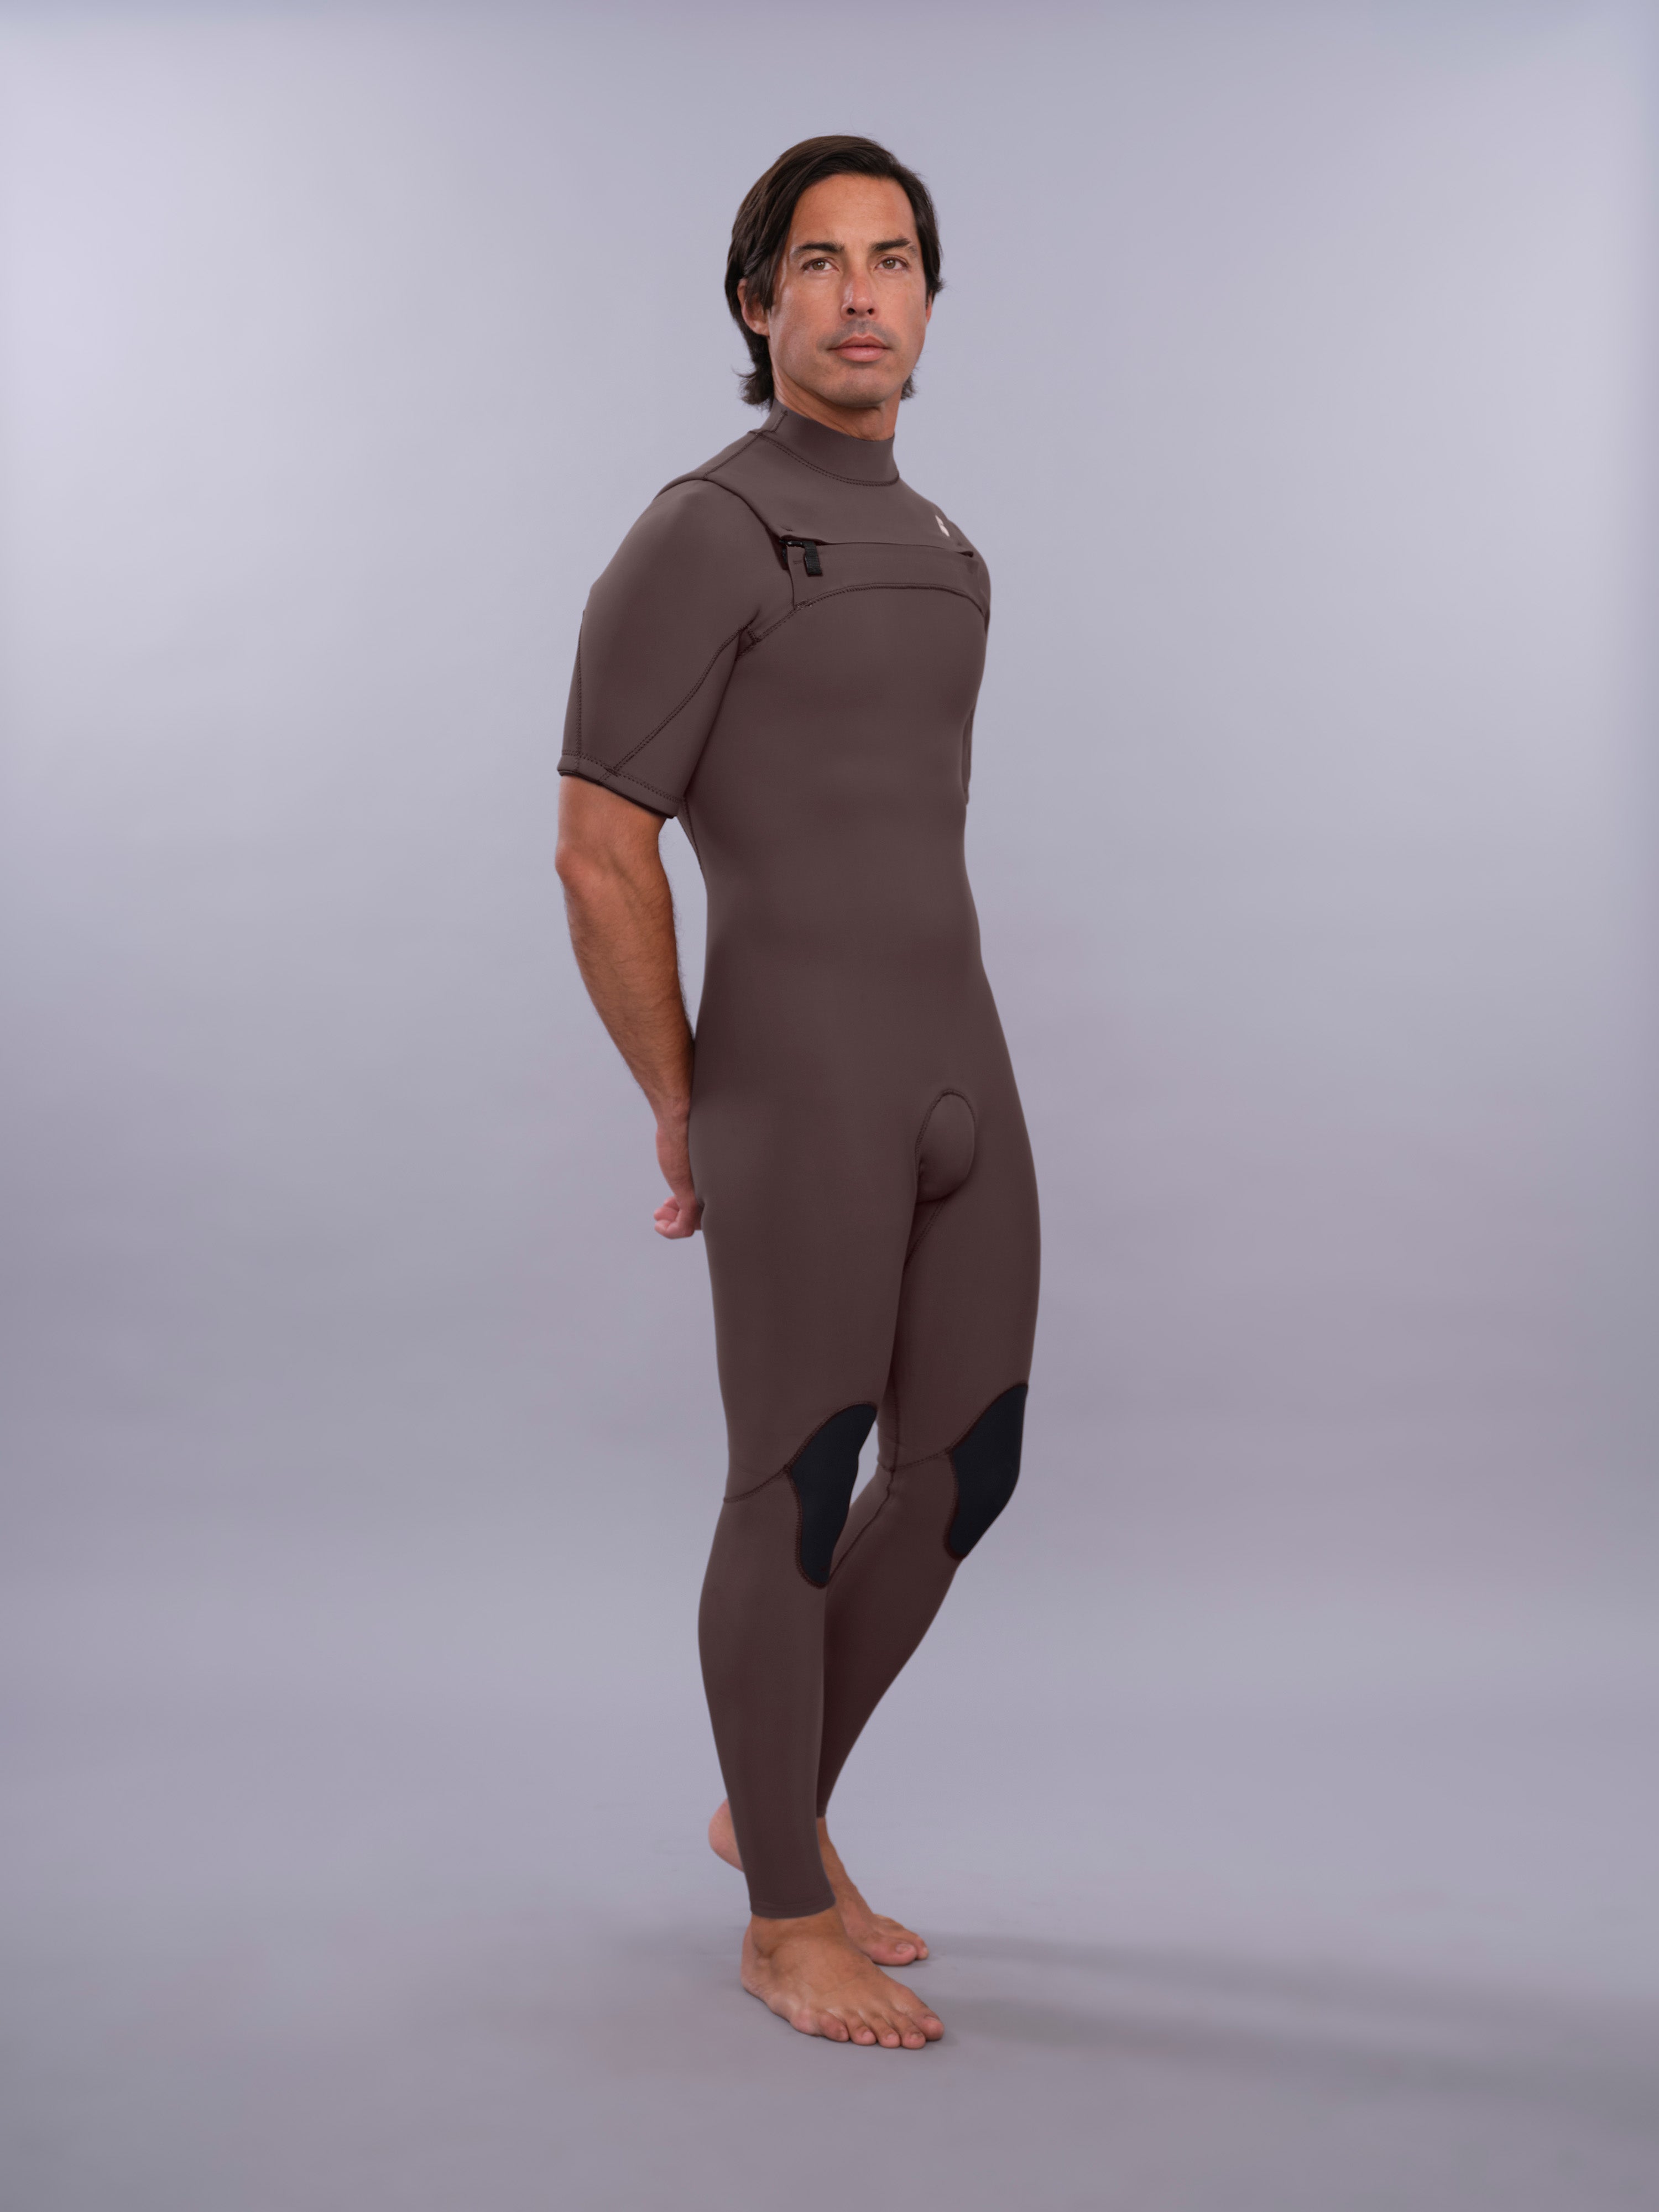 Custom Surf Wetsuit | Made with Yamamoto Neoprene | Most 